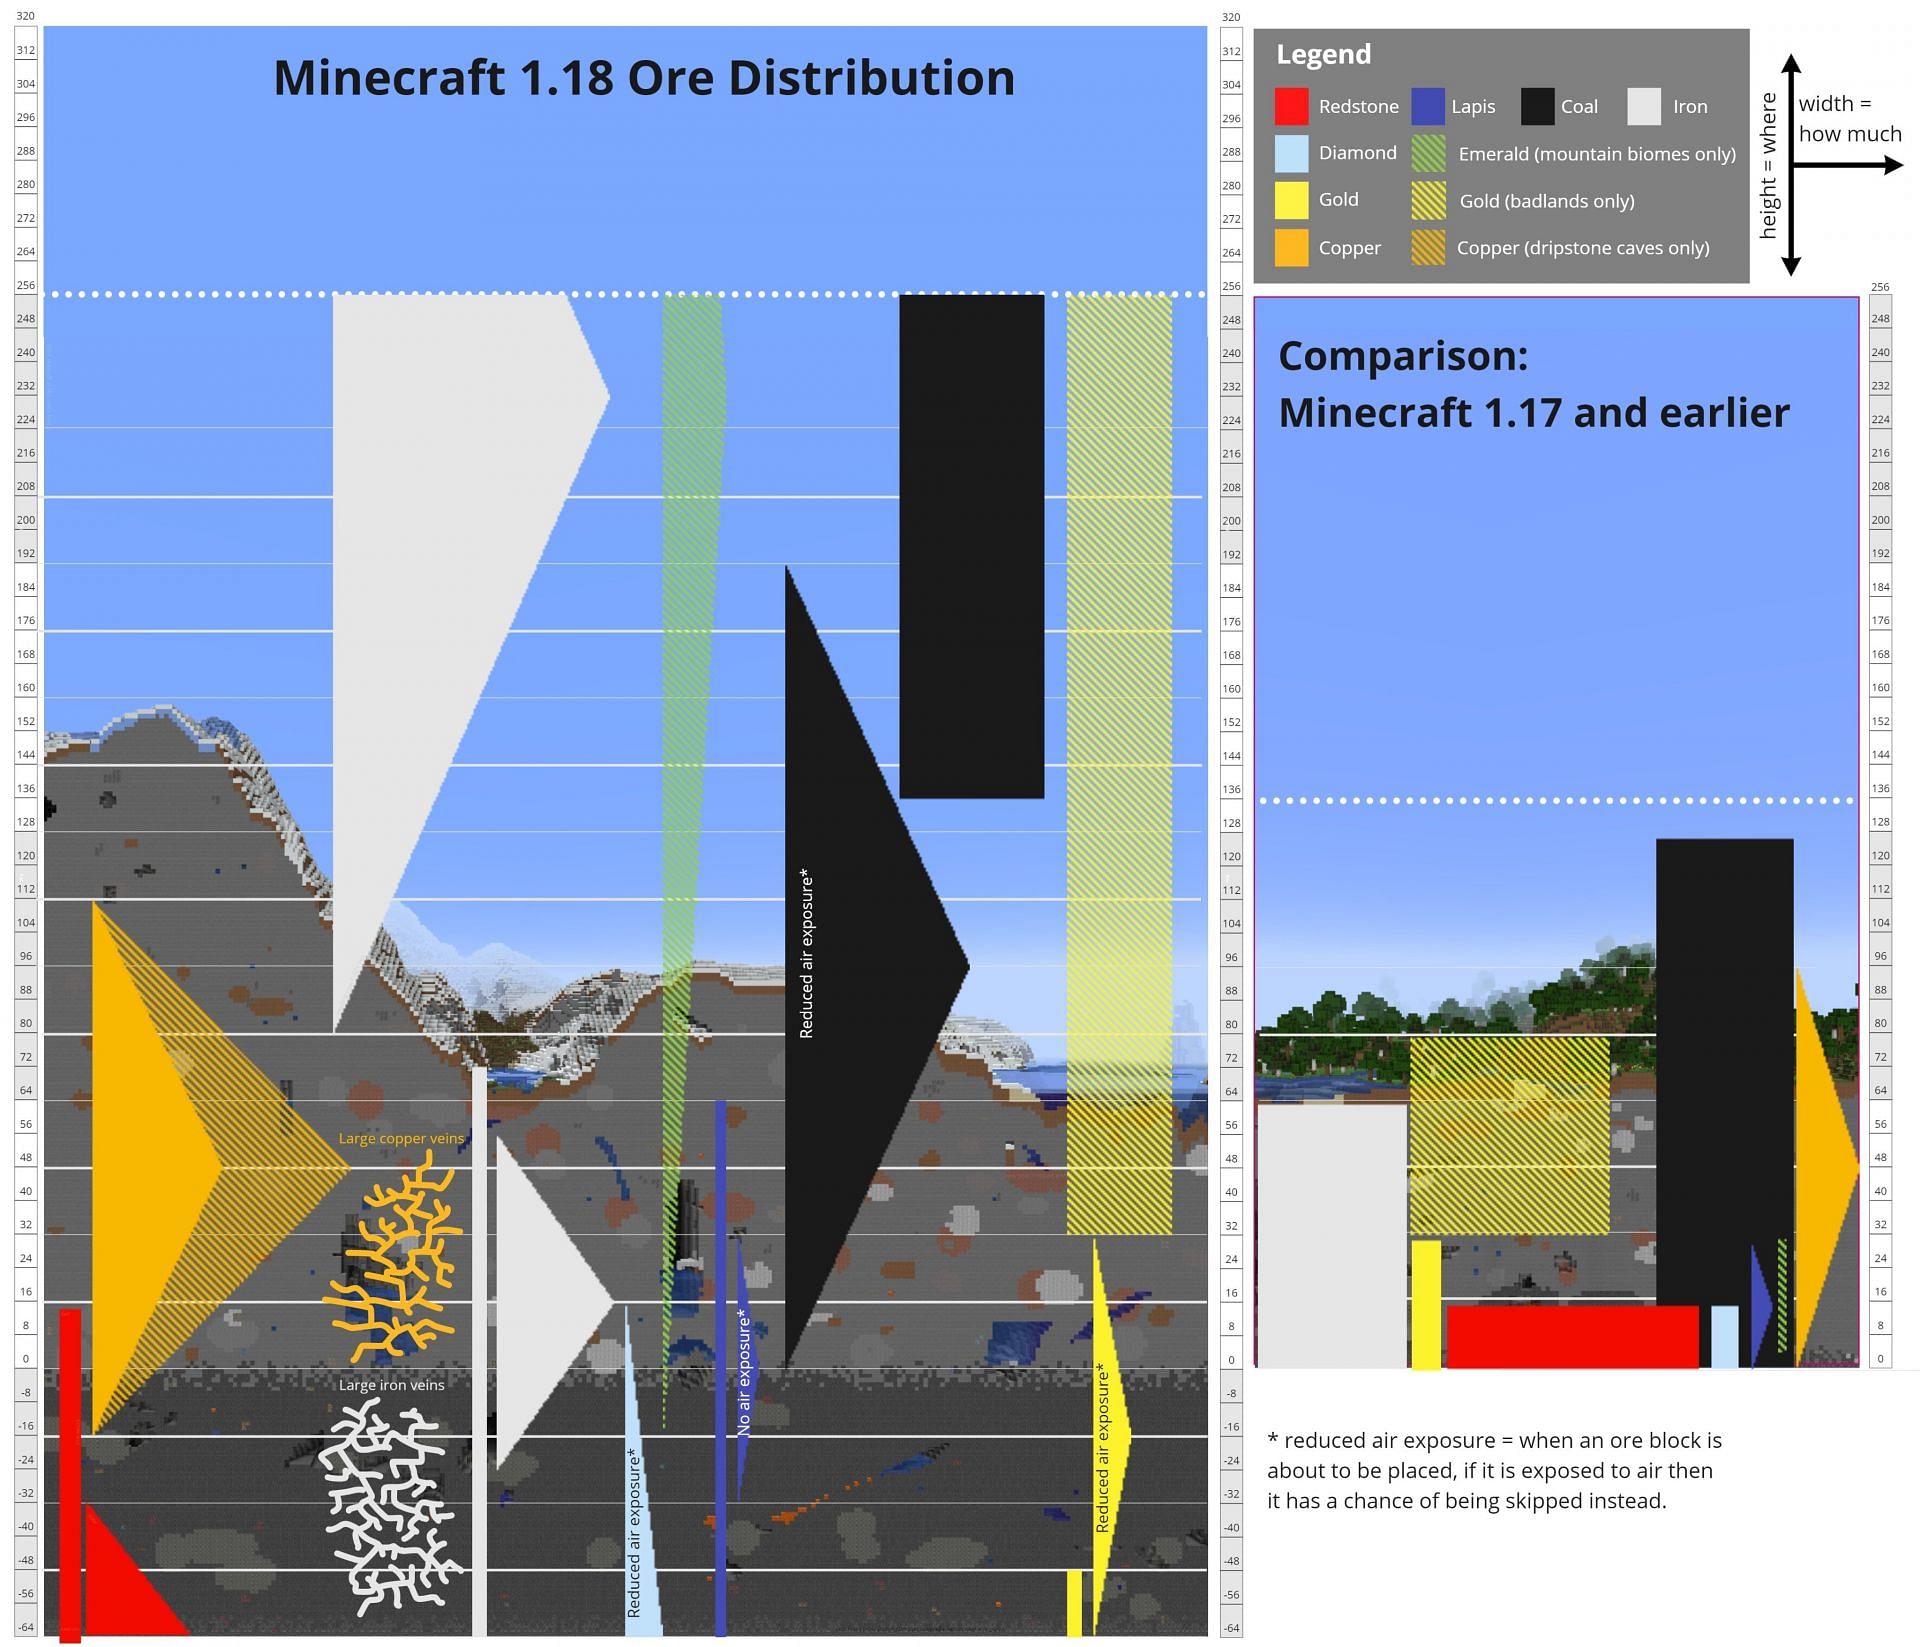 Ore distribution in Minecraft 1.18 (Image via Minecraft)